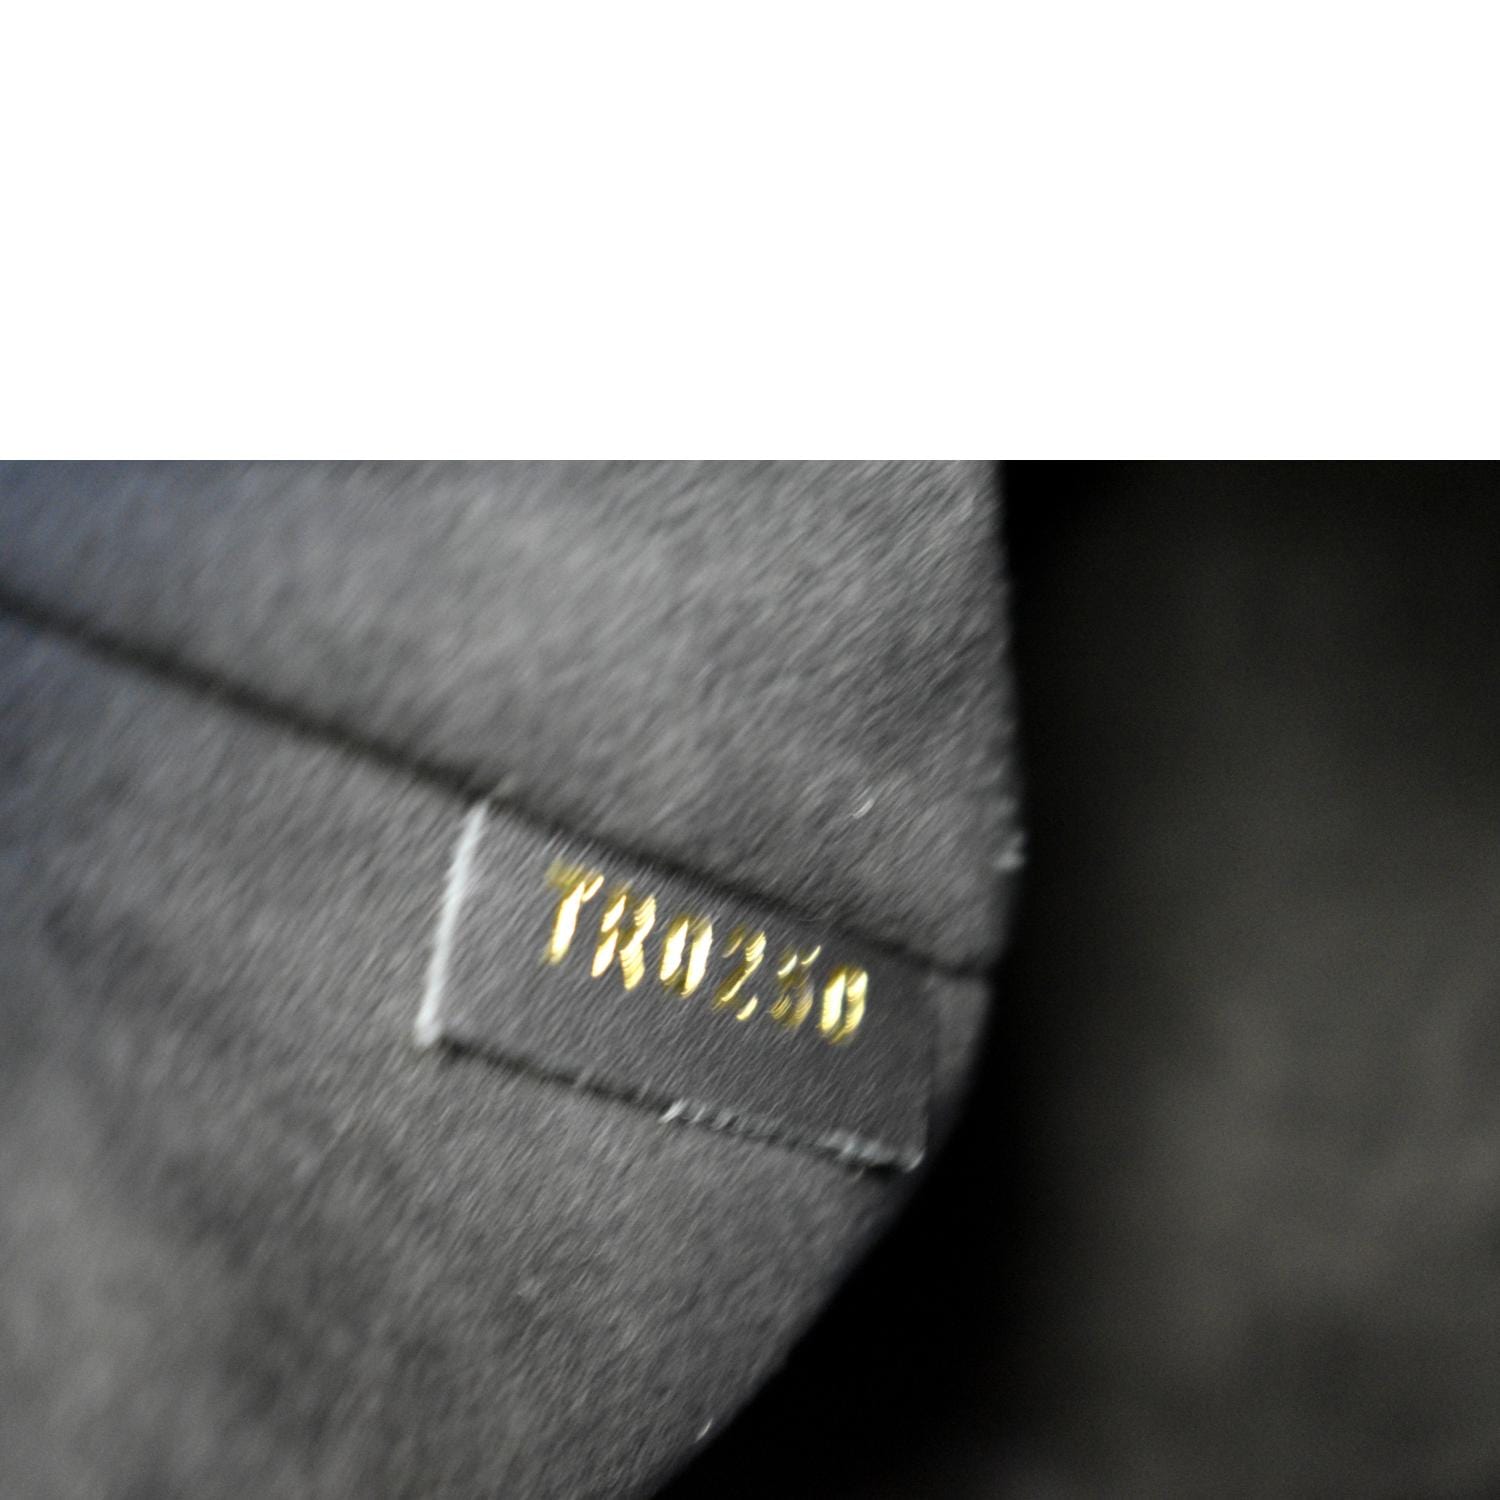 Mint Cond! Louis Vuitton Soufflot BB Crossbody Mono with Black Leather